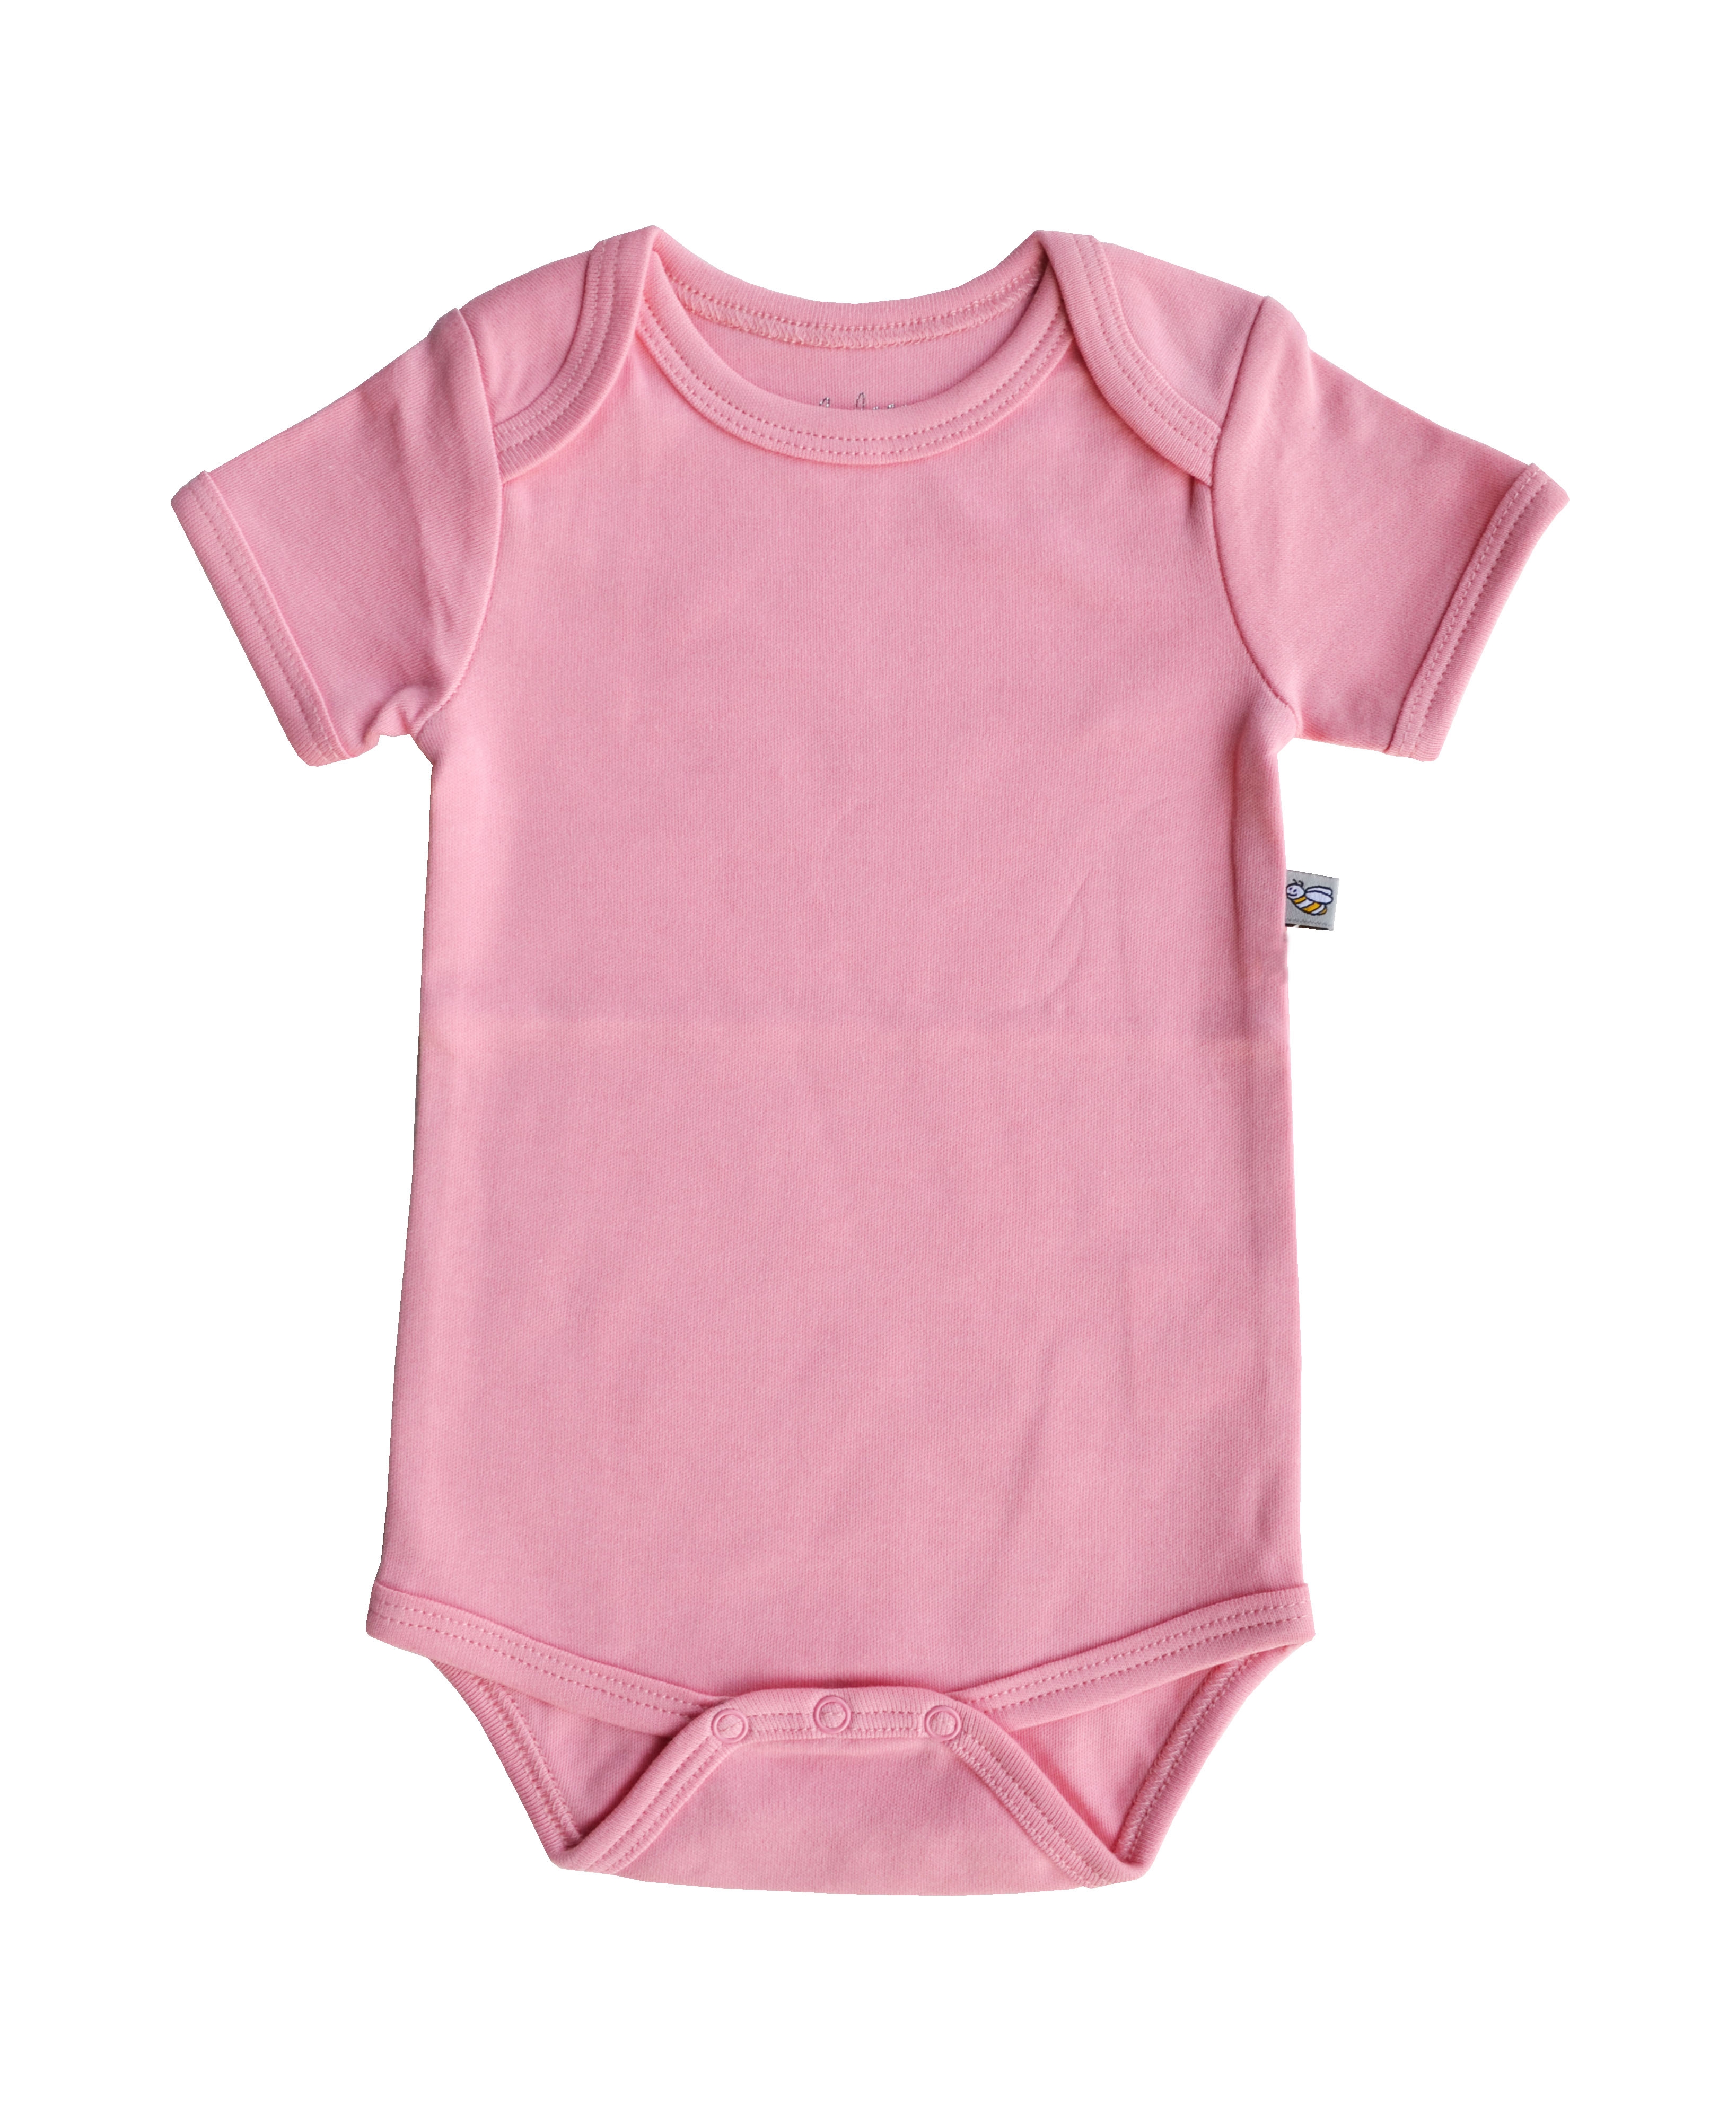 L.Pink Baby Body (100% Cotton Interlock Biowash)